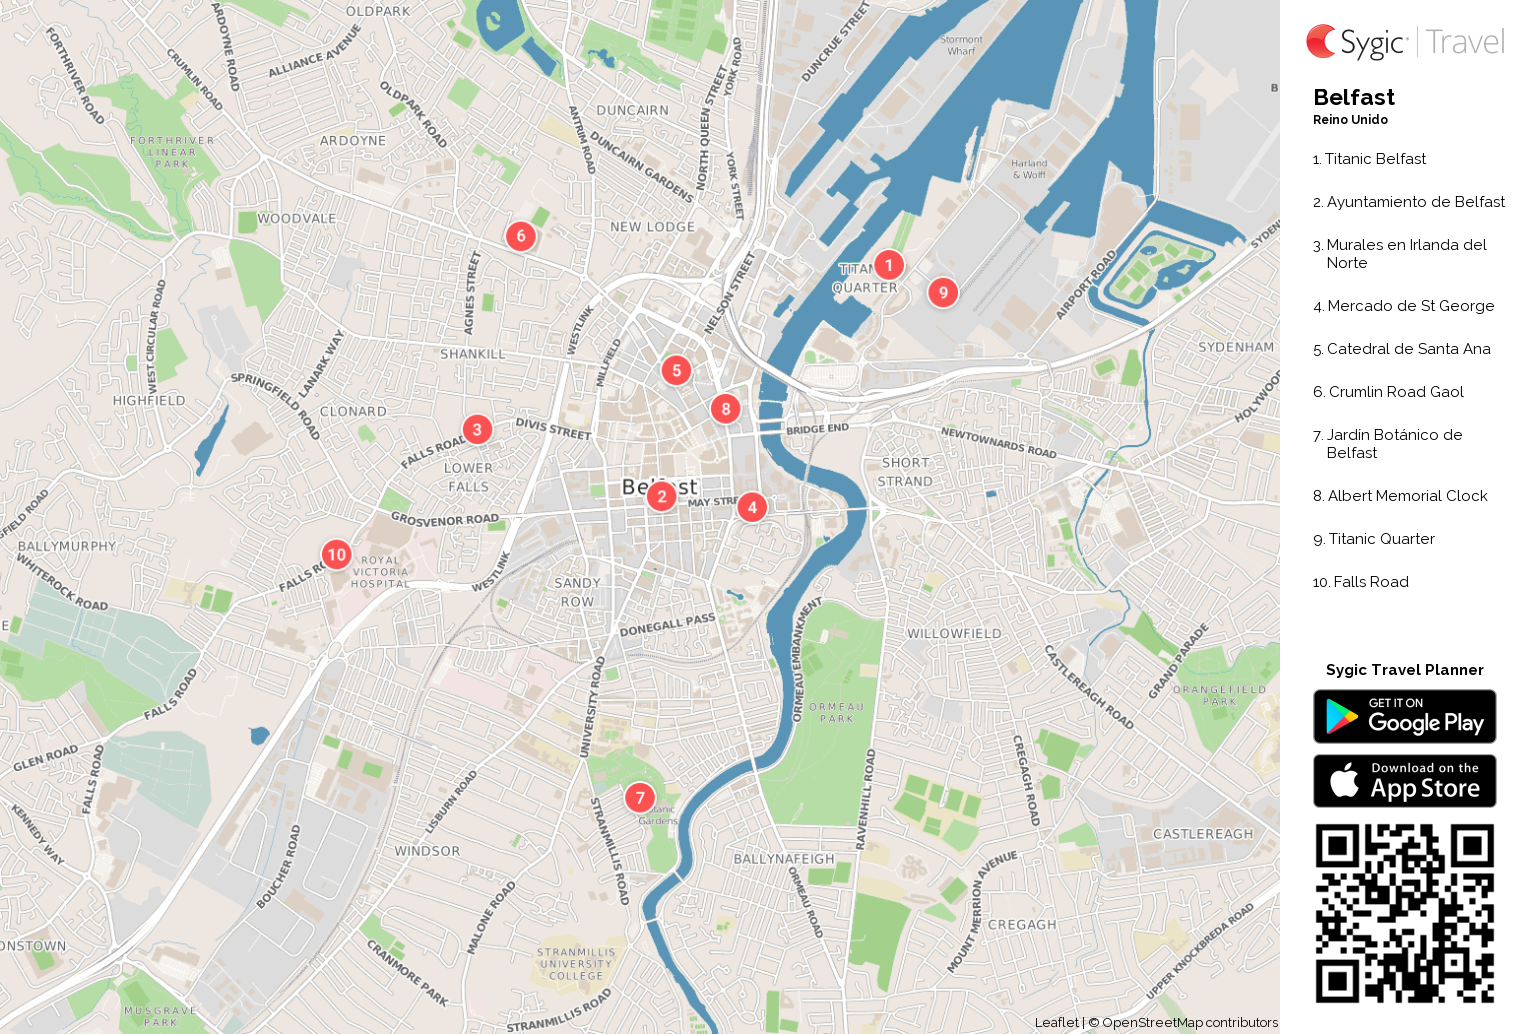 belfast mapa Belfast: Mapa turístico para imprimir | Sygic Travel belfast mapa